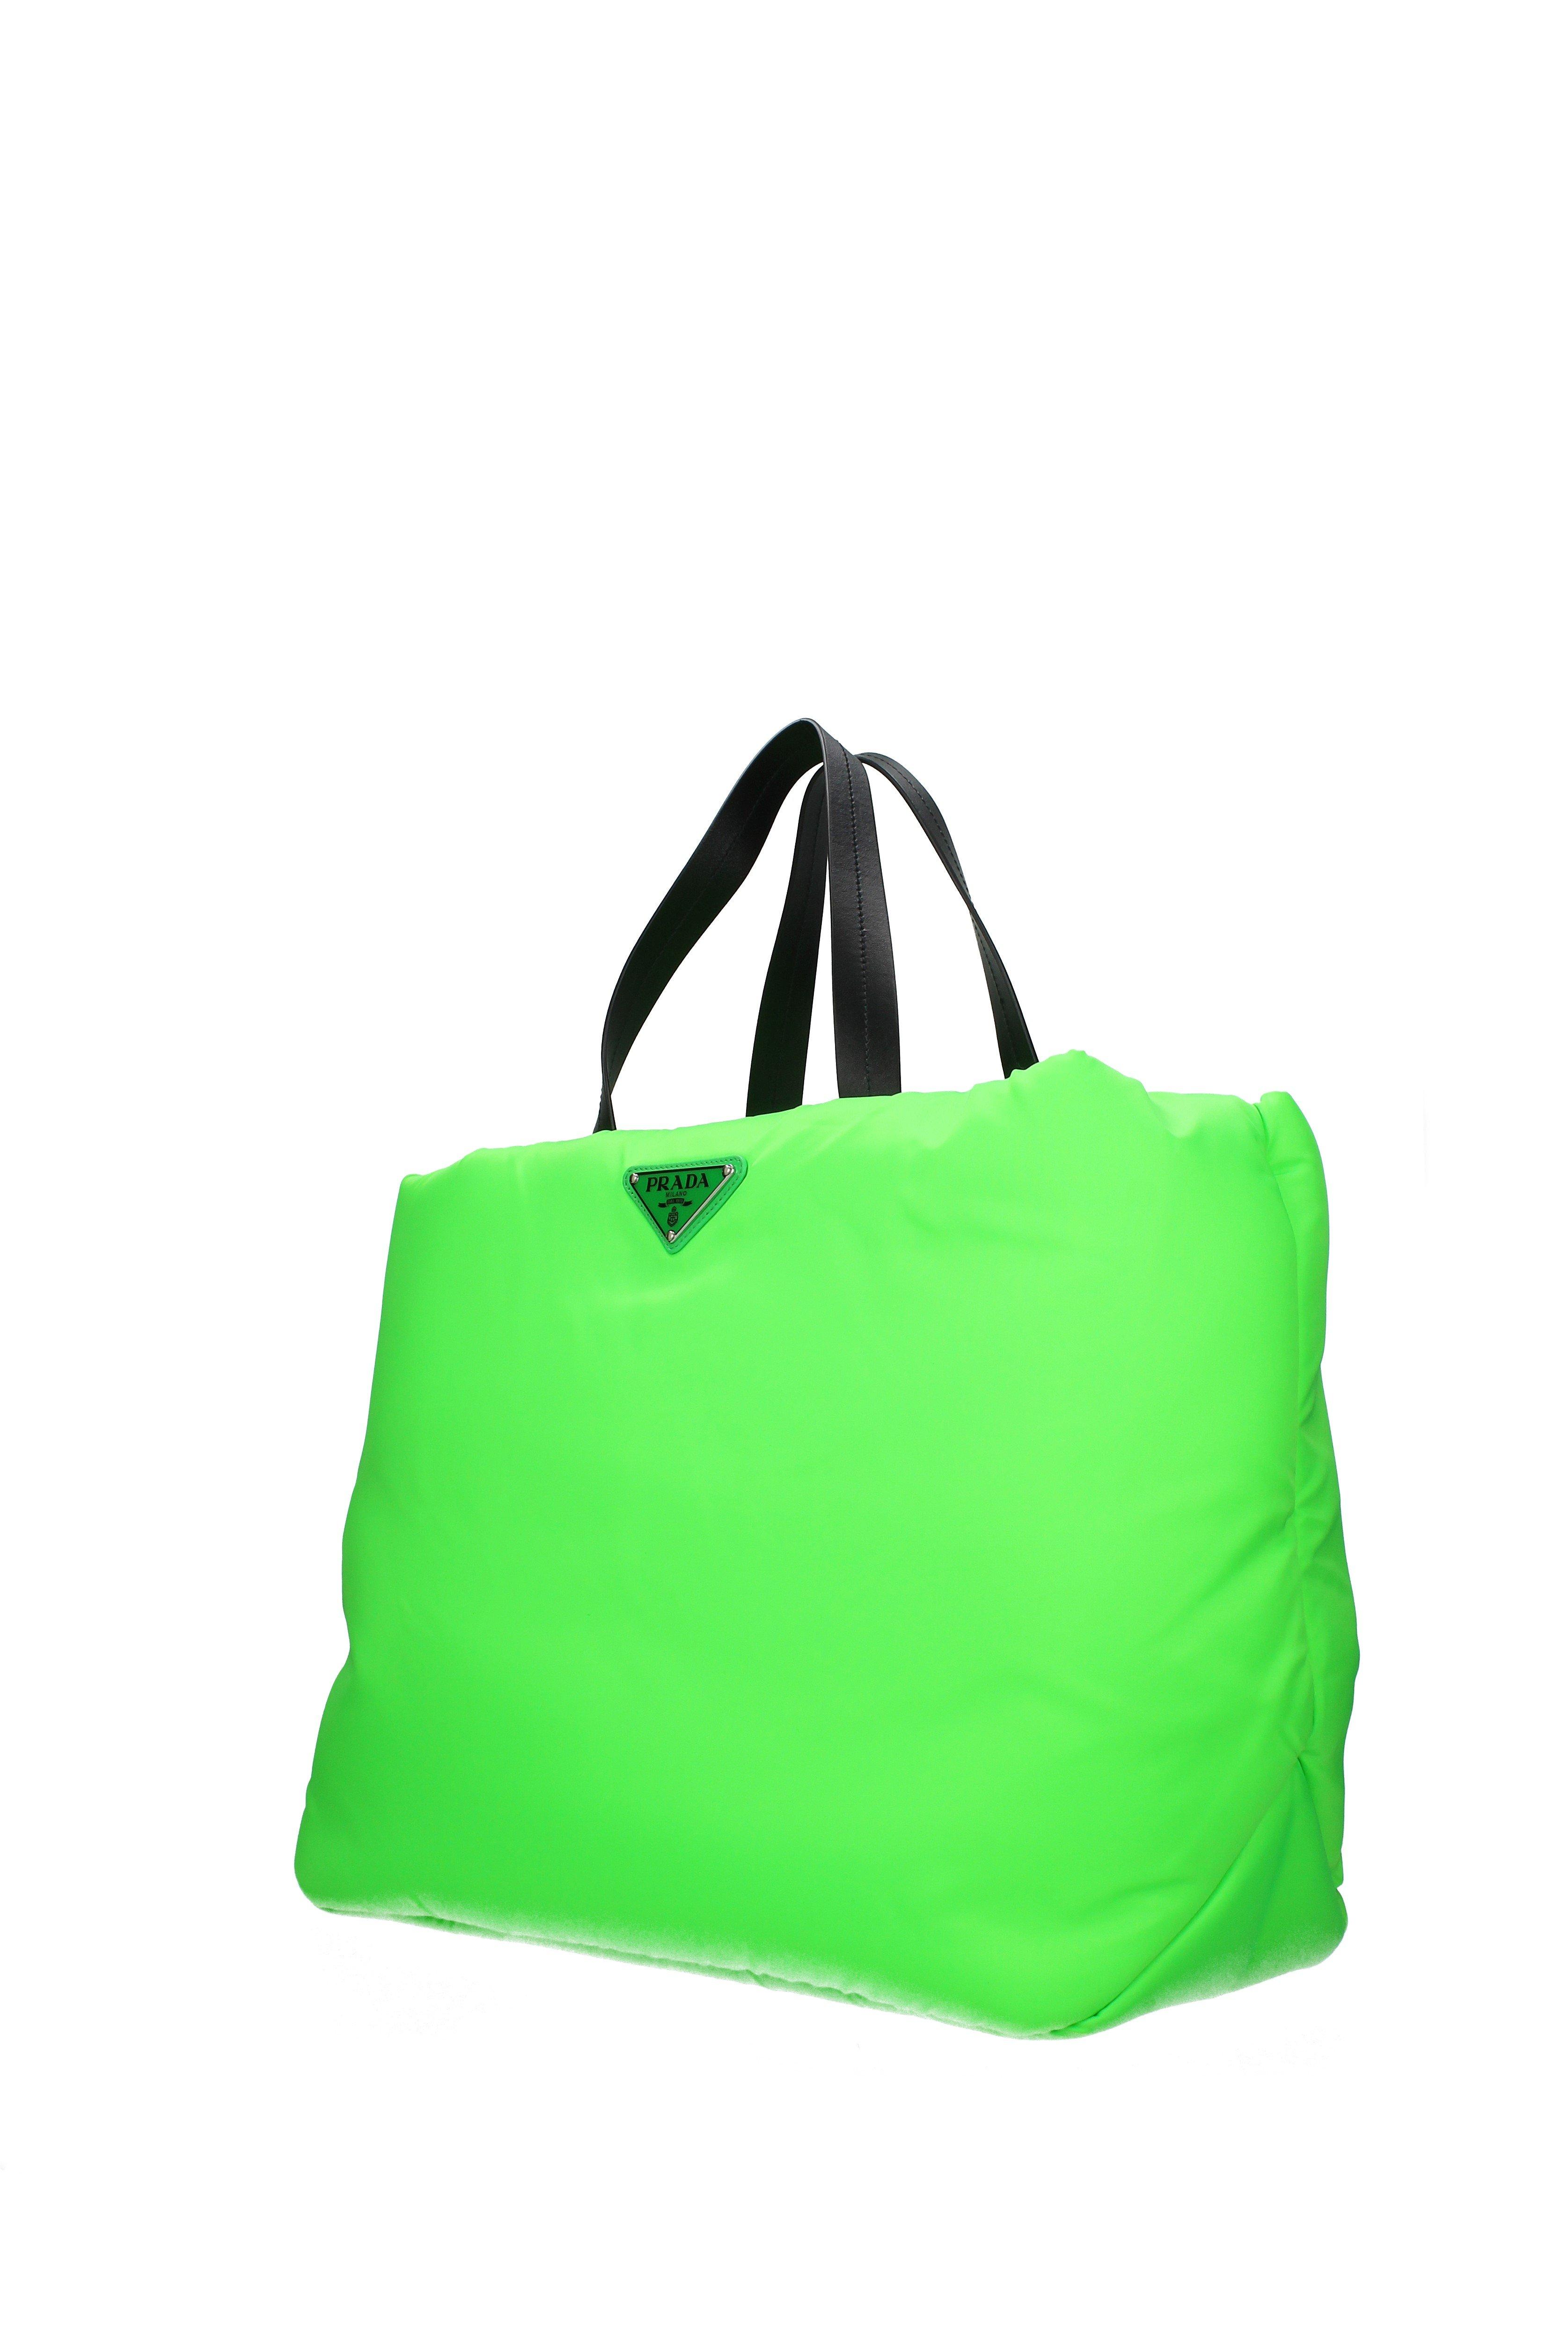 Prada Leather Neon Green Nylon Handbag - Lyst